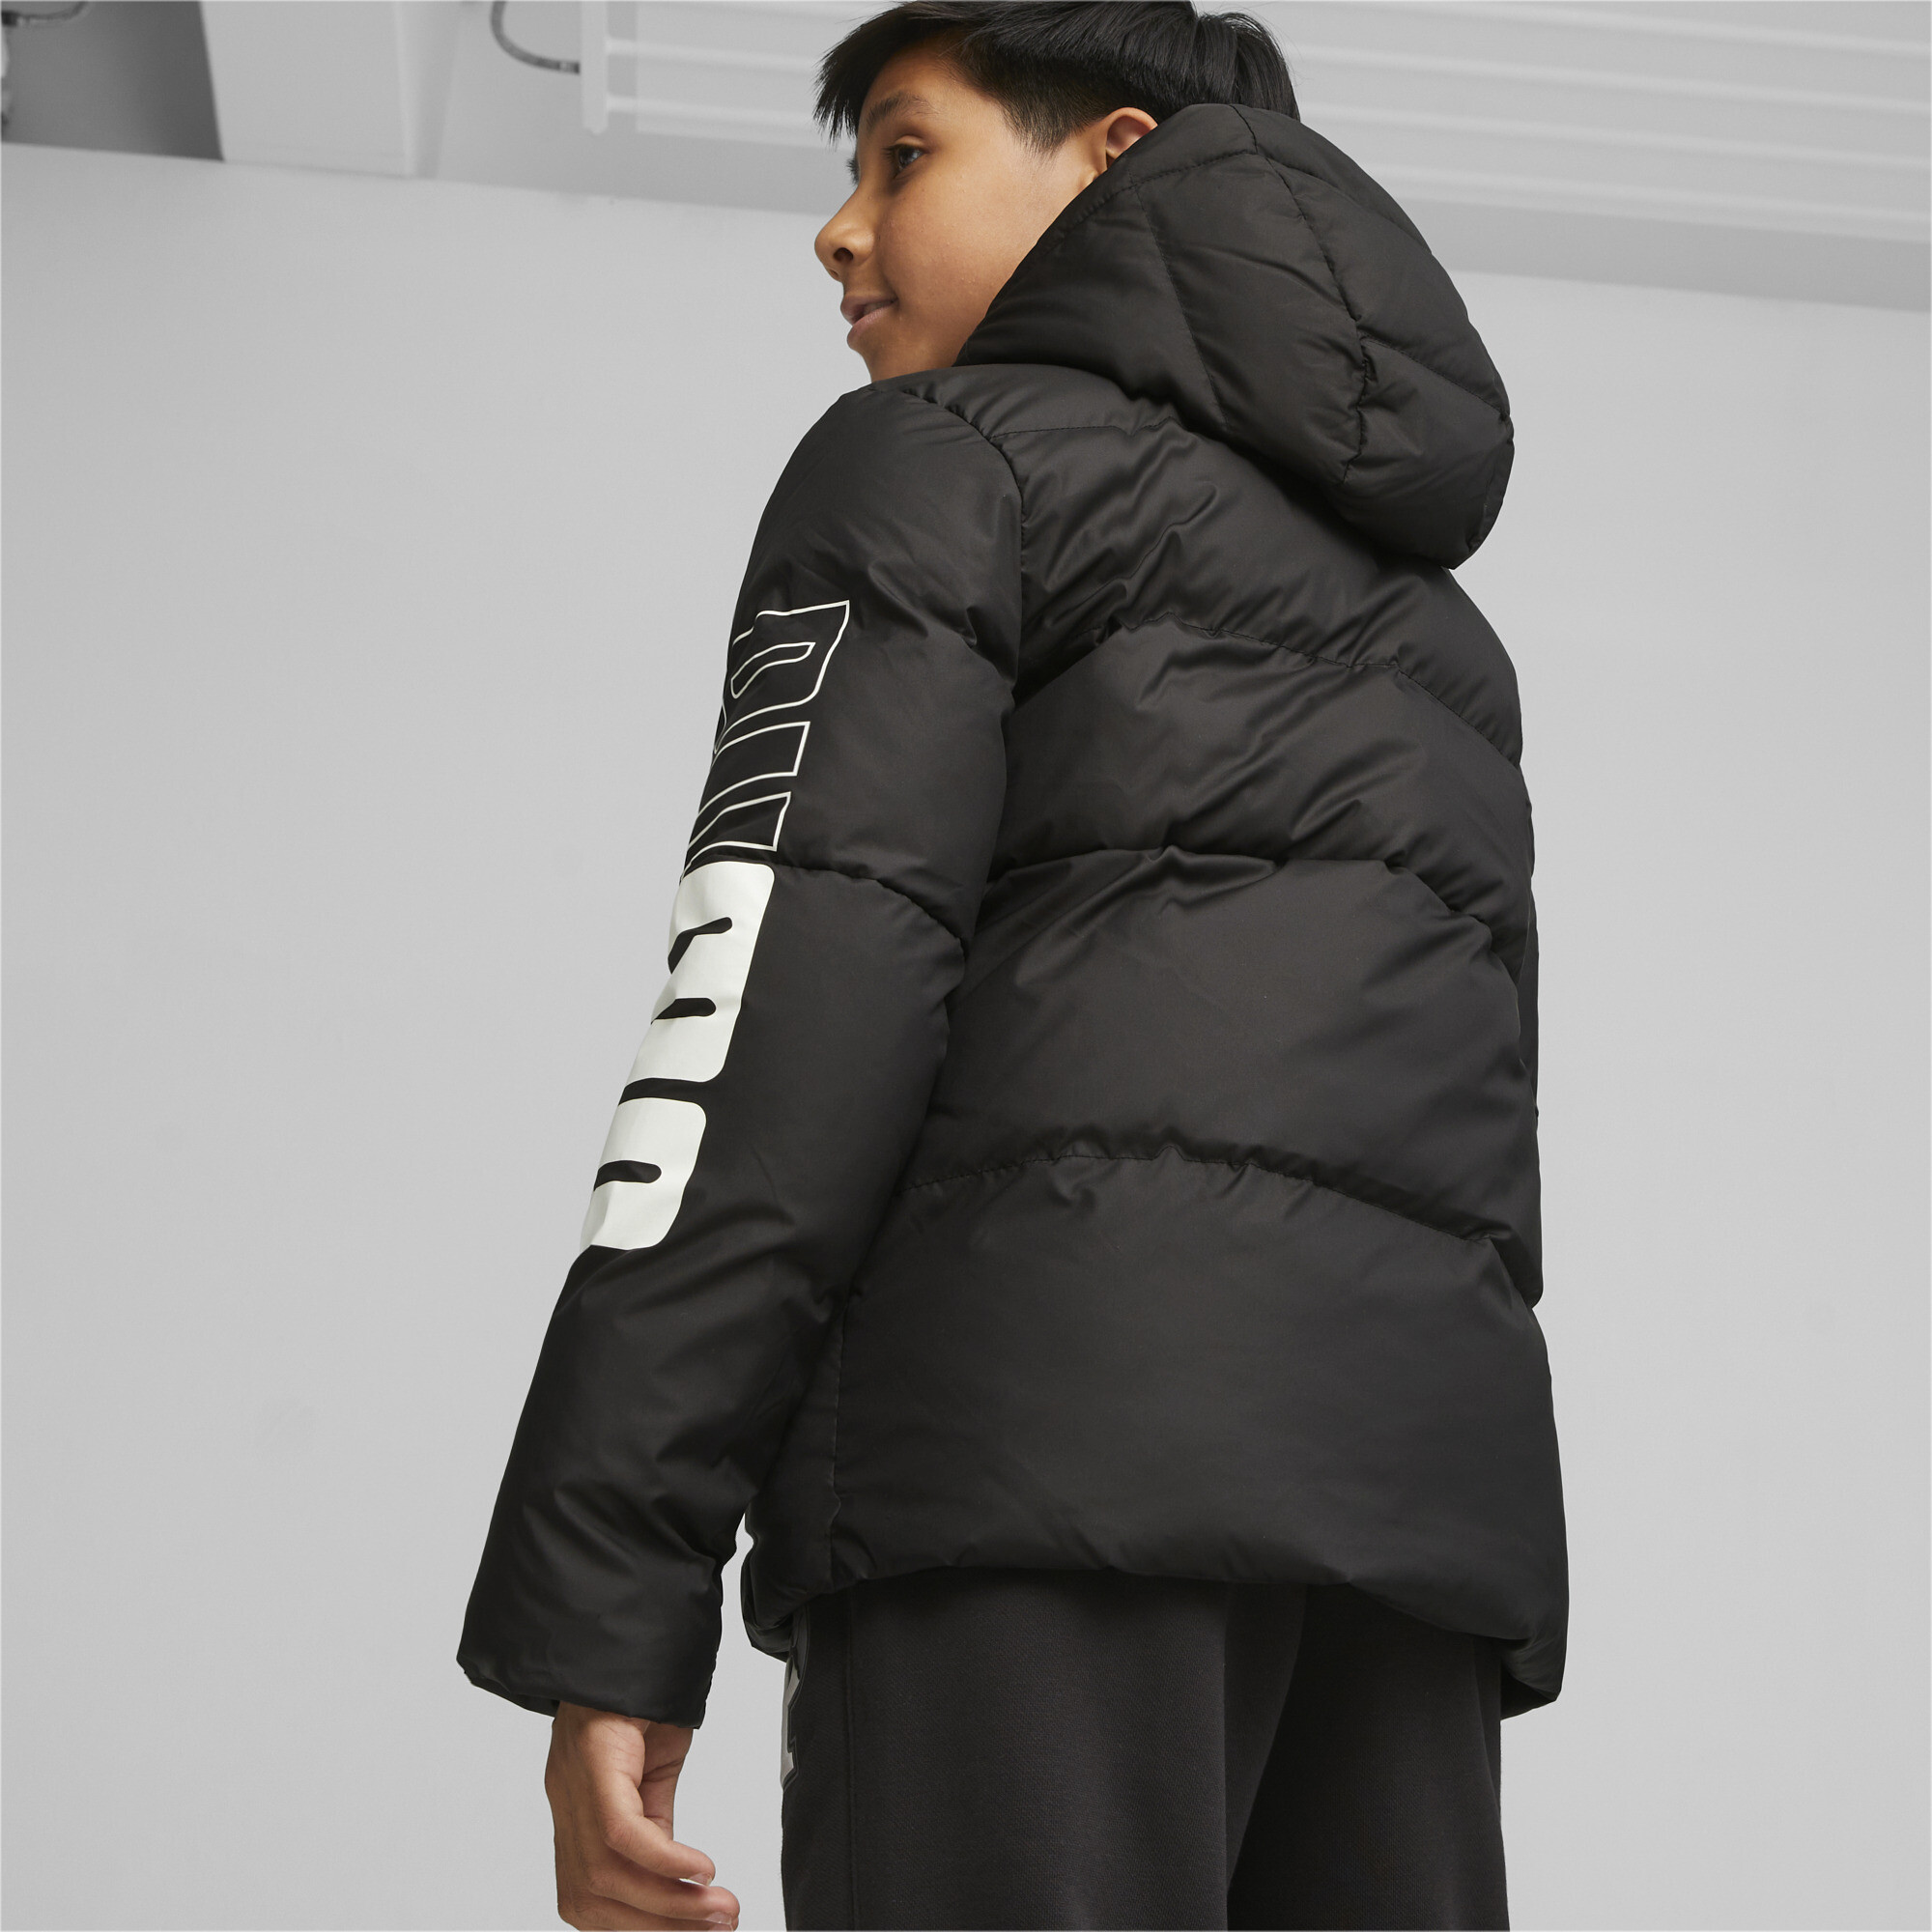 Puma POWER Youth Hooded Jacket, Black, Size 5-6Y, Clothing